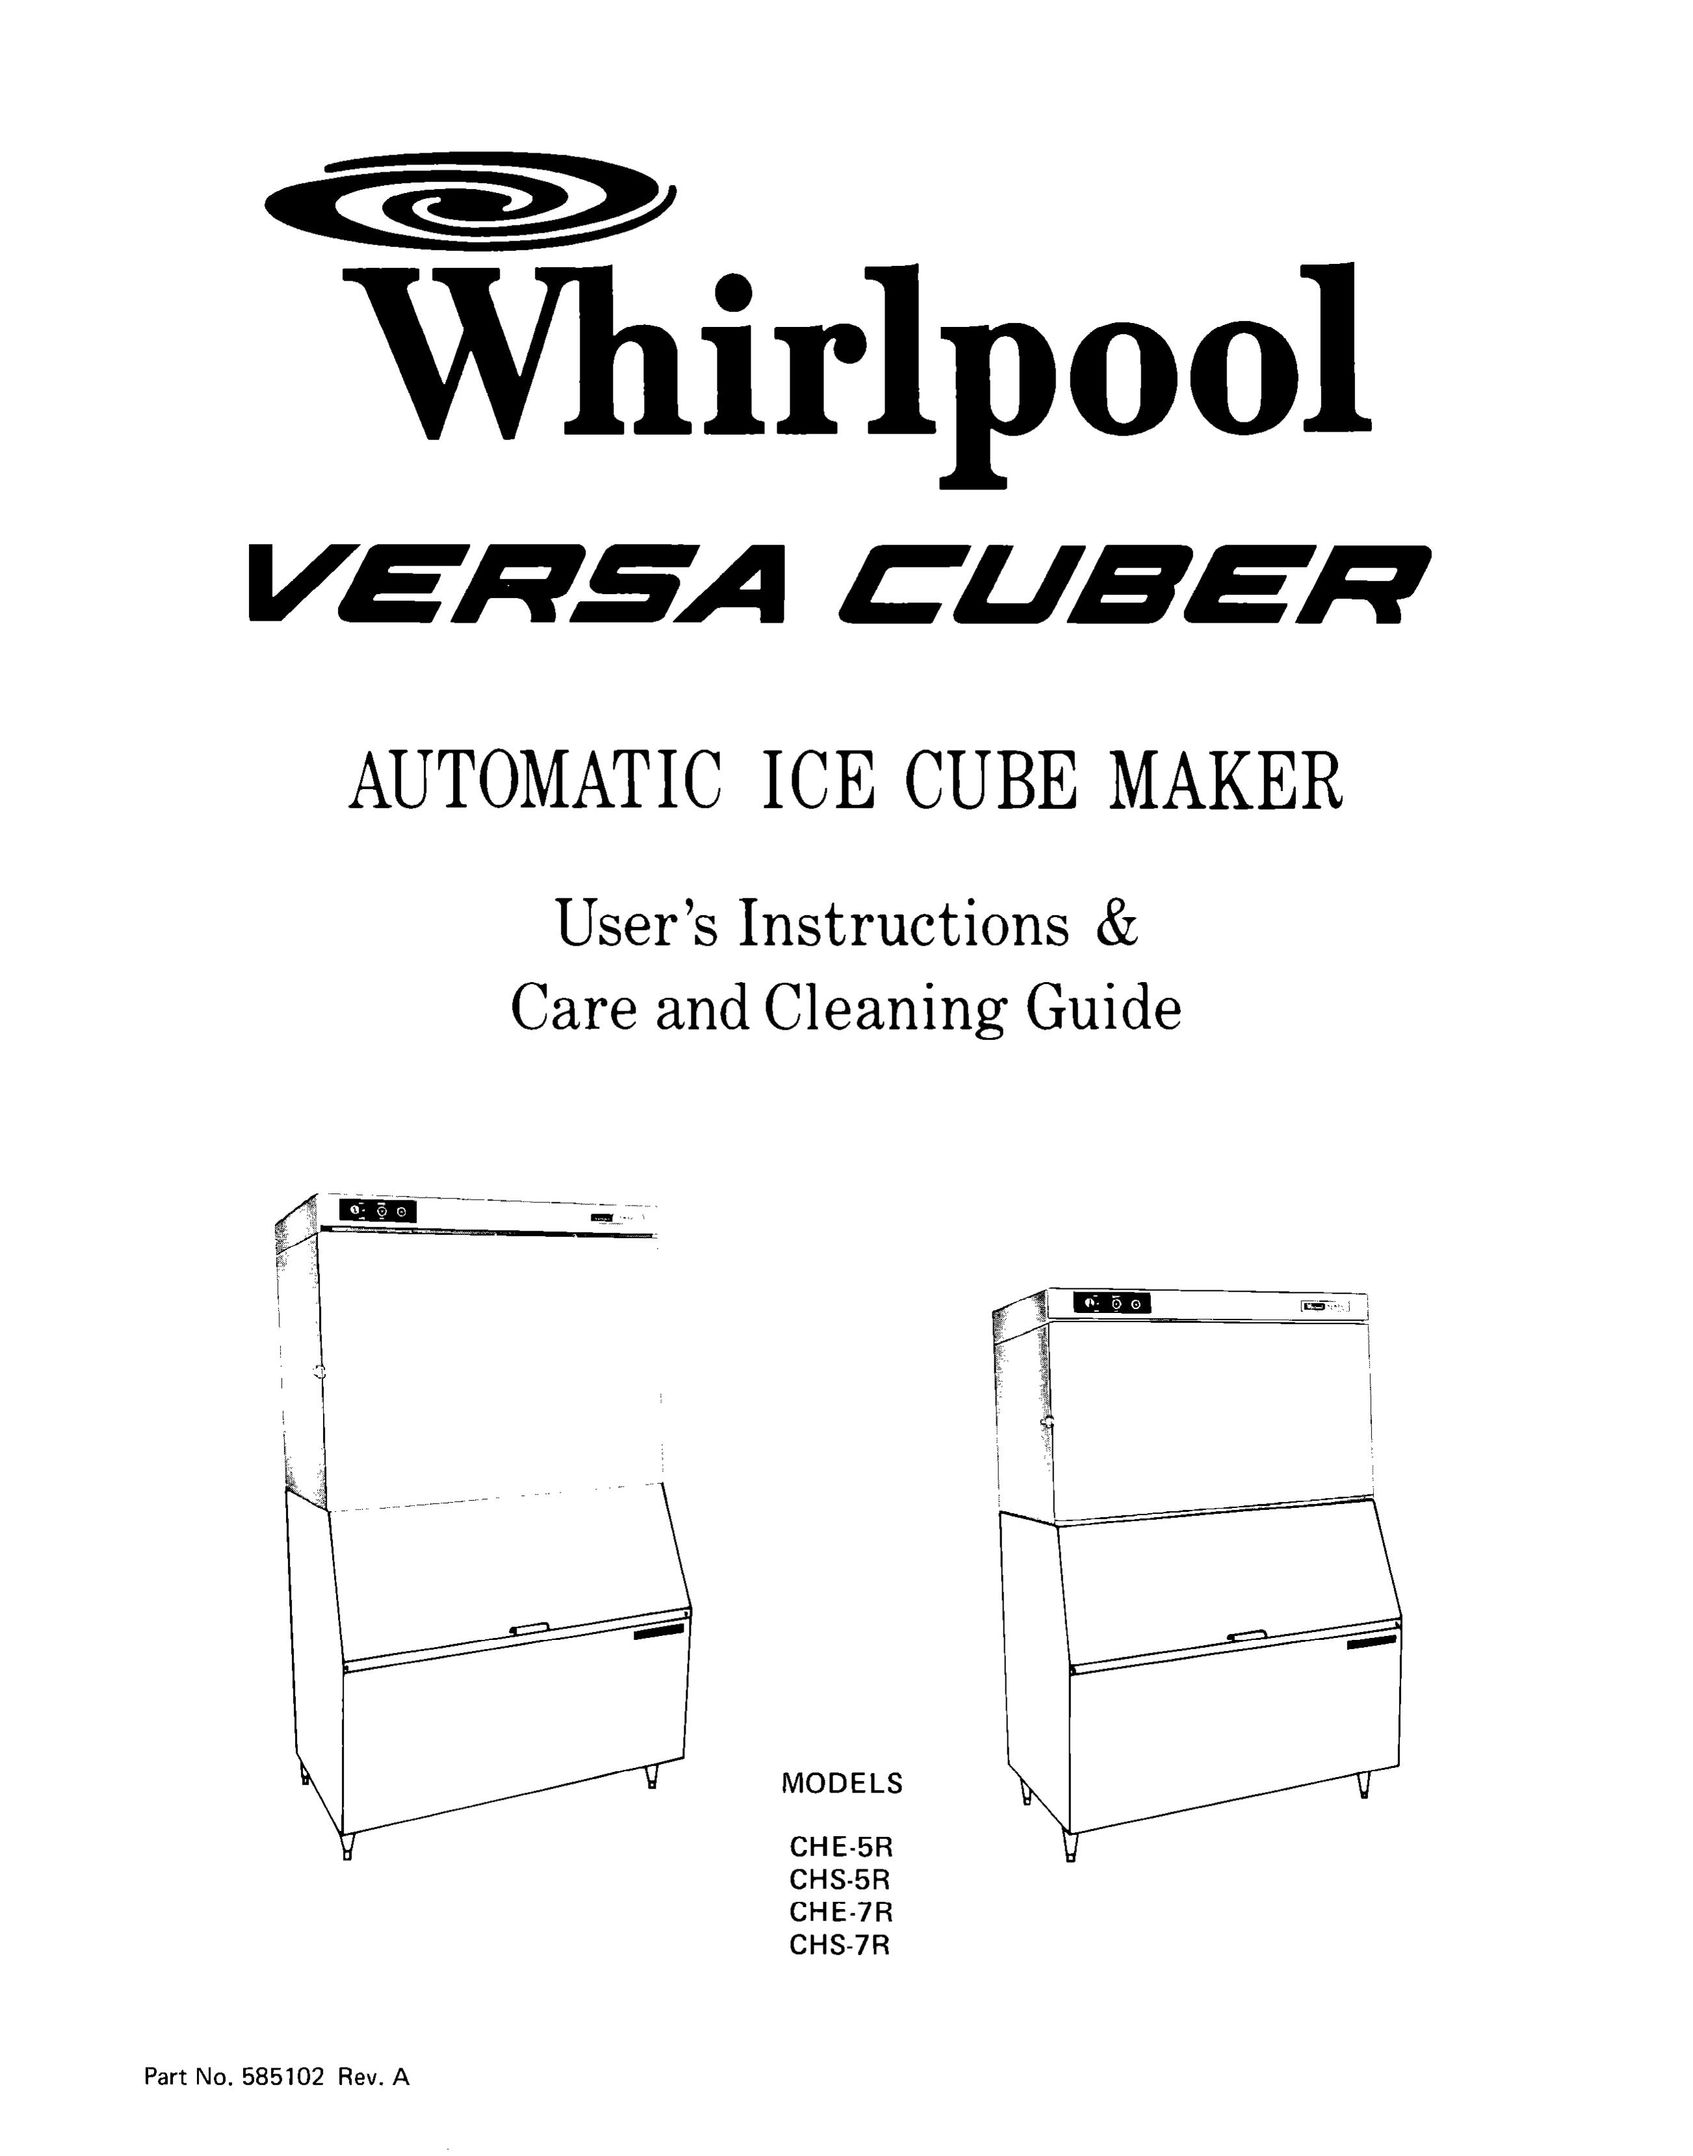 Whirlpool che-5r Ice Maker User Manual